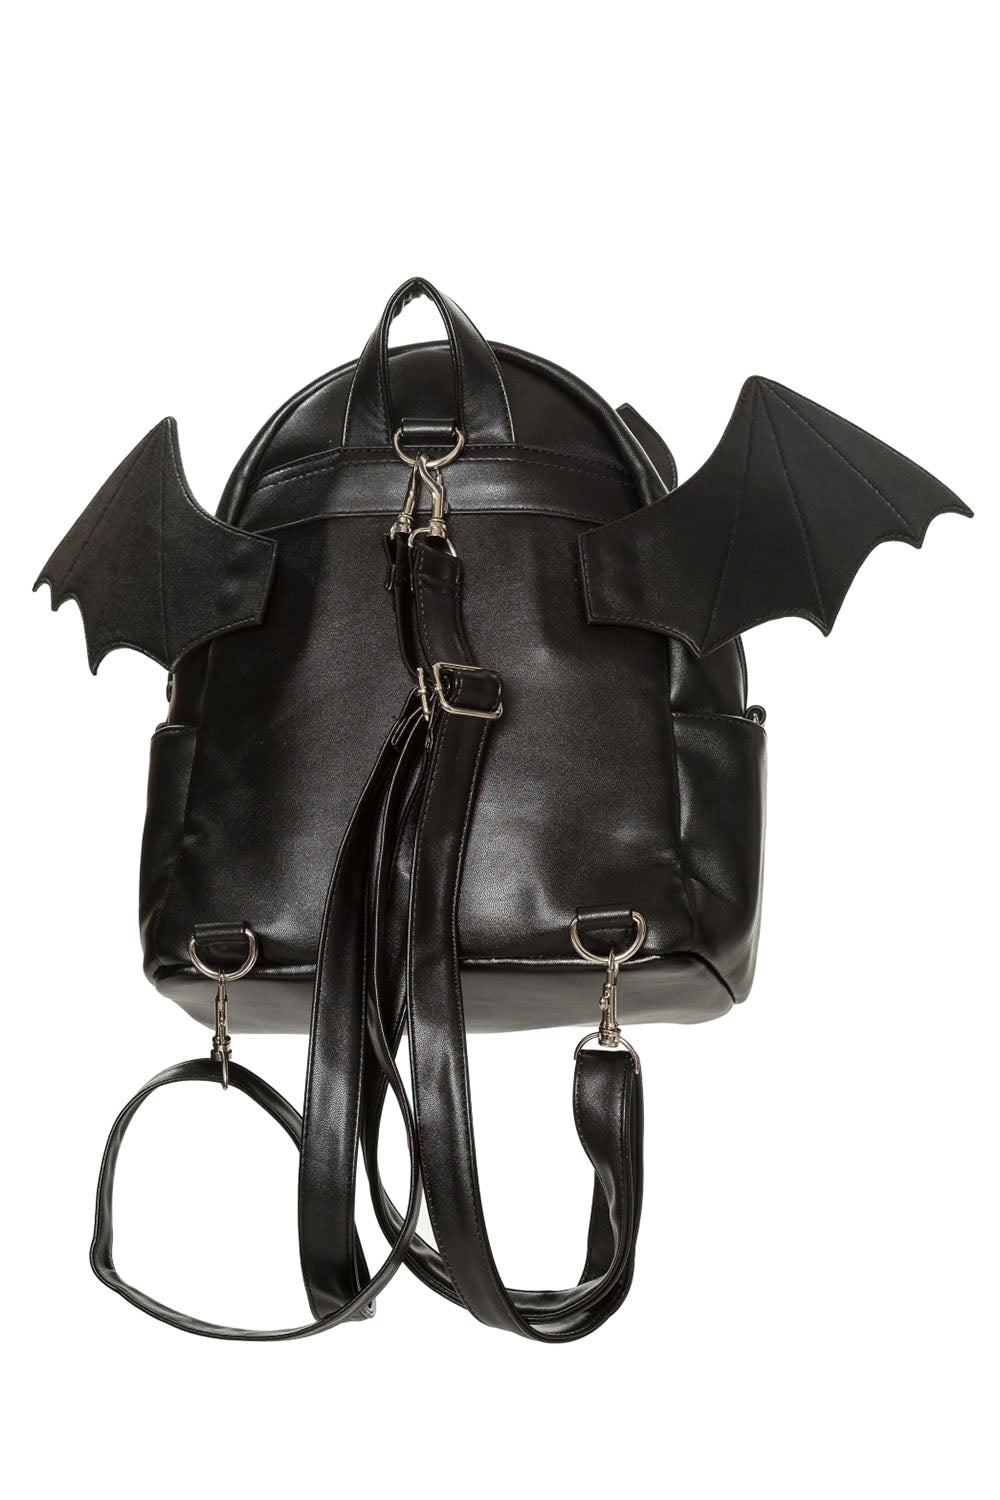 gothic witch bat bag 